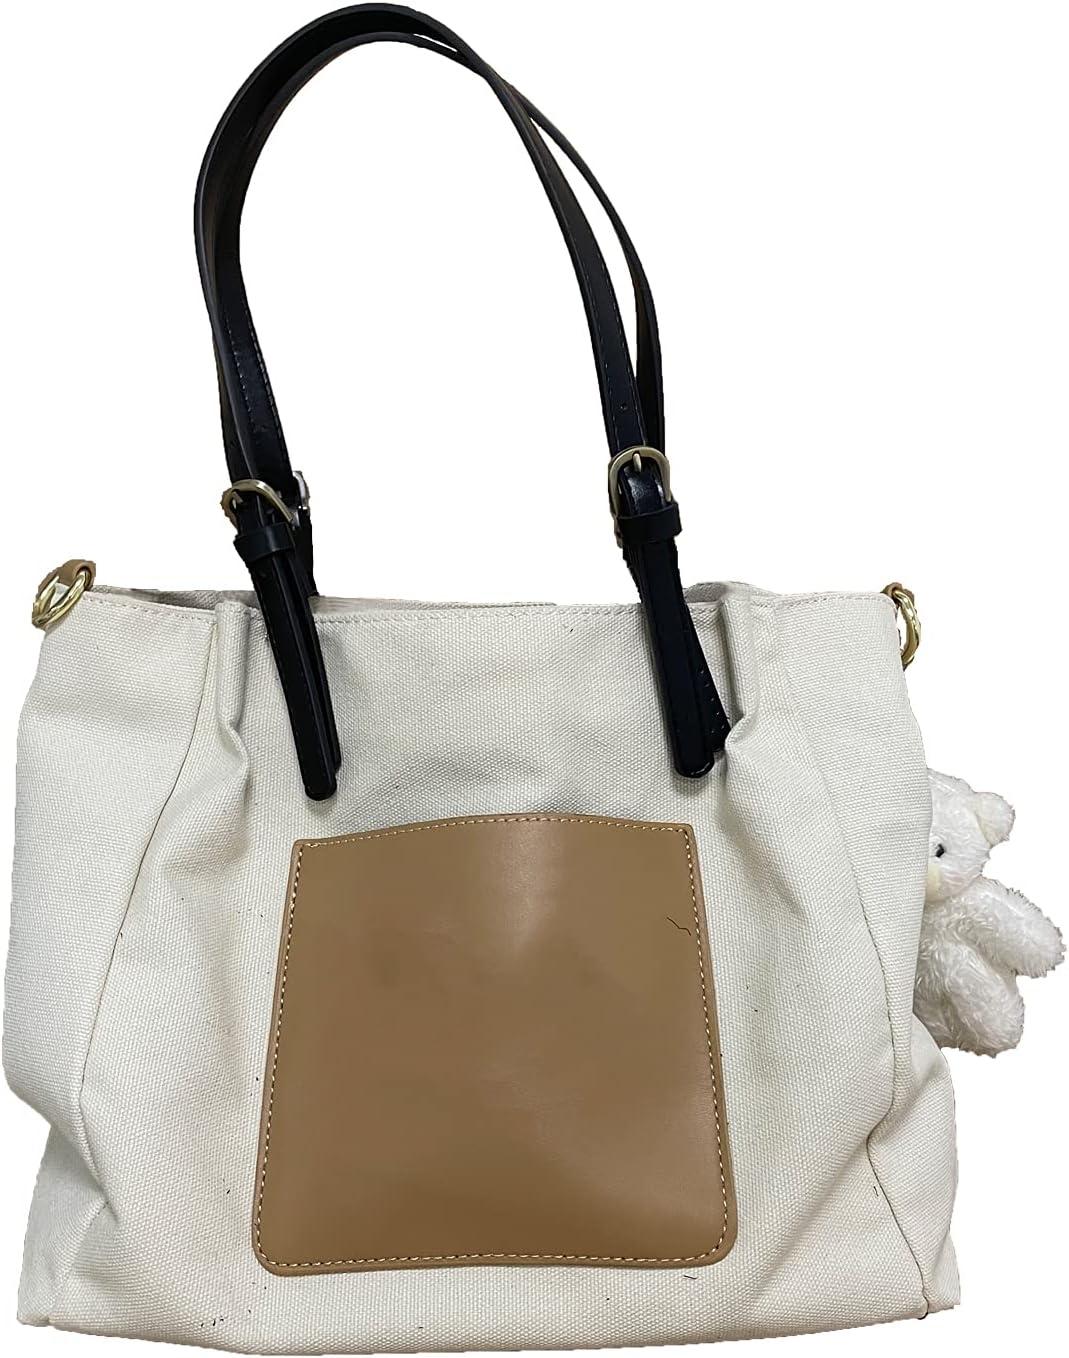 TINBERON Chains Strap Handbag Handles Shoulder Straps Luxury Design Vintage  Gold Bag Chain Strap Replacement Leather Bags Straps